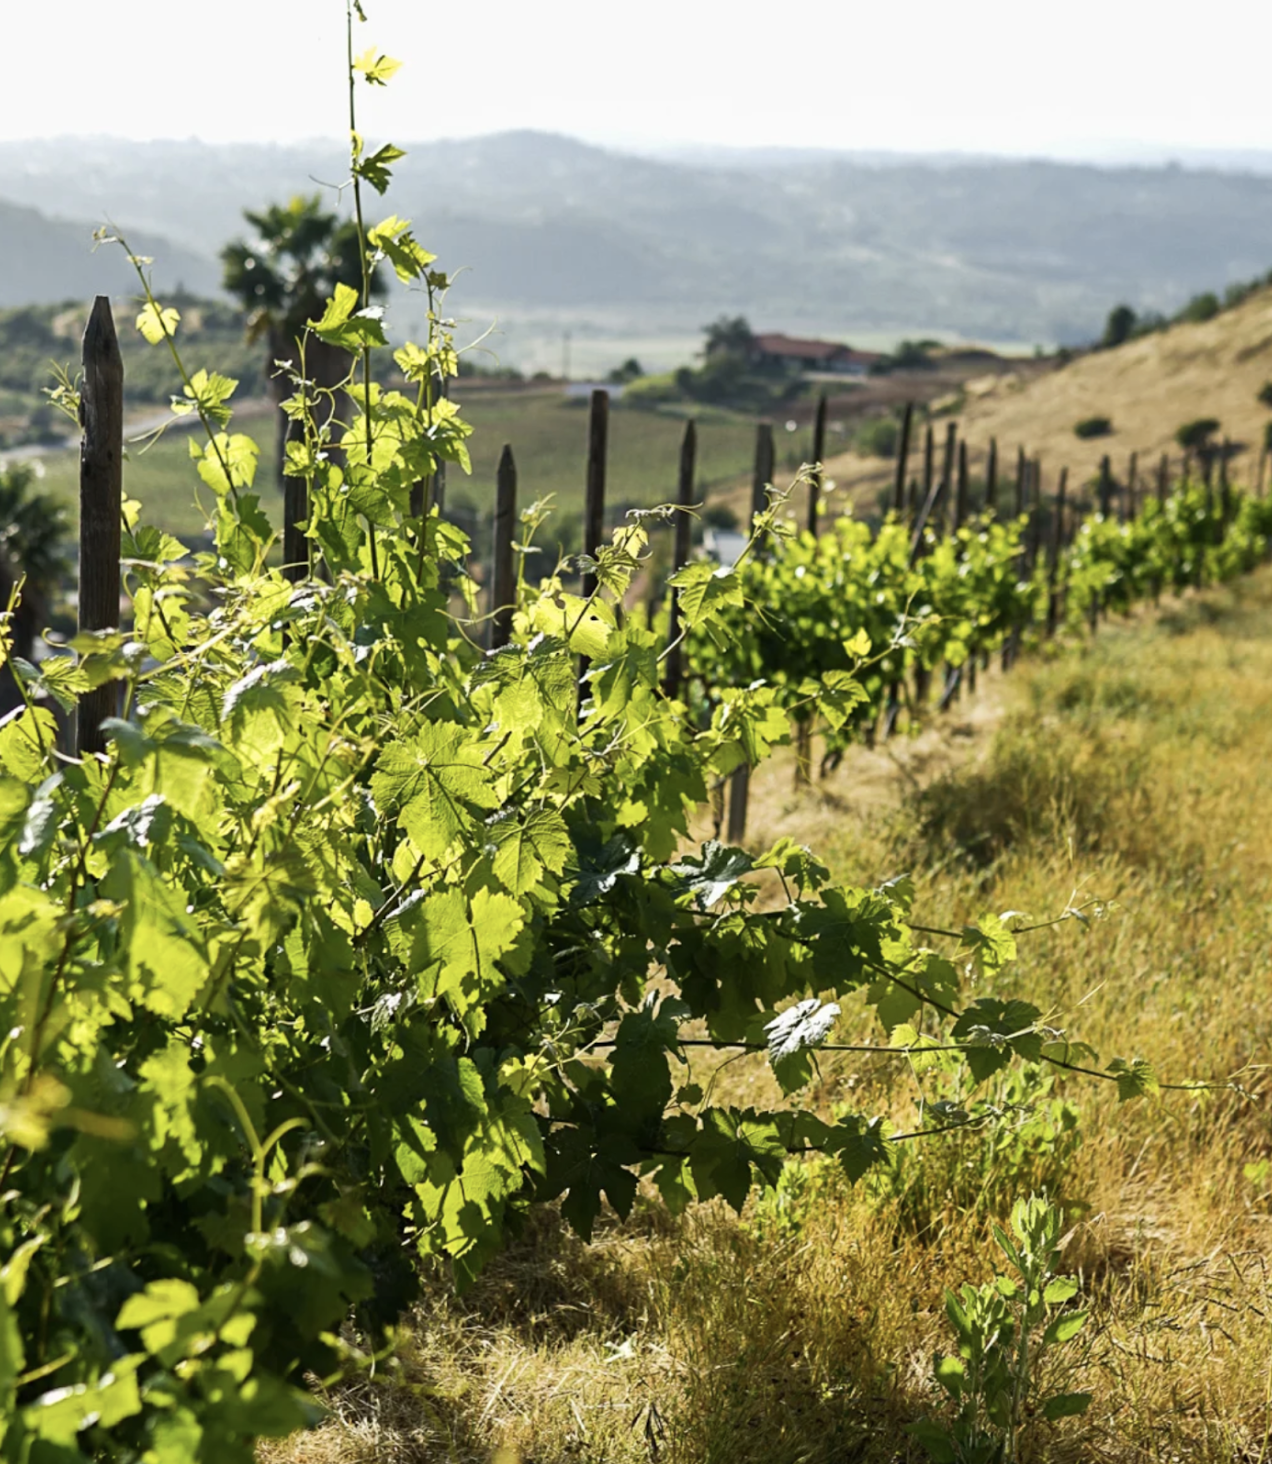 Long stretch of very green vineyards